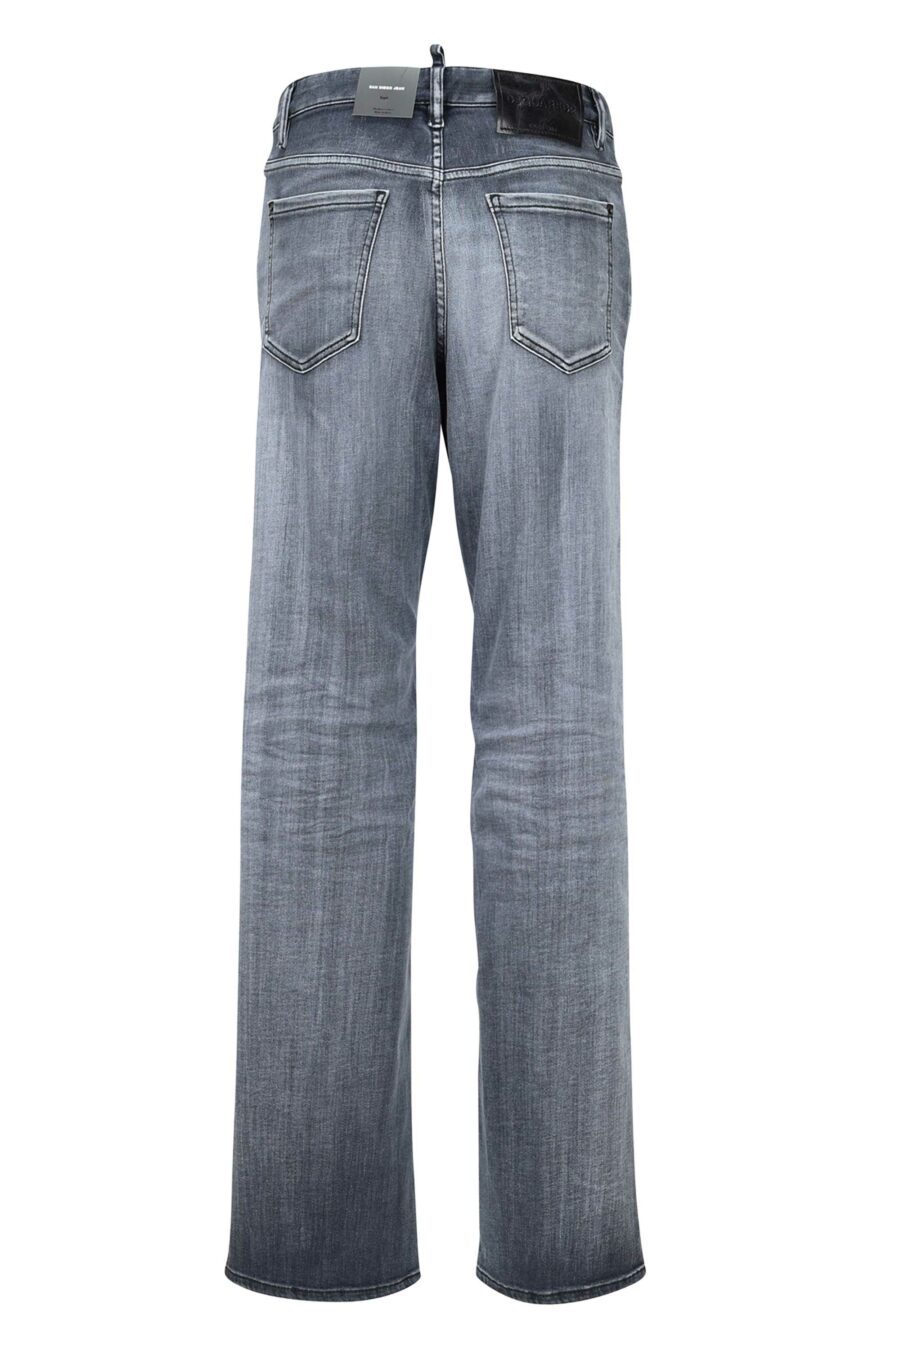 Pantalon en denim "San Diego jean" noir usé - 8054148230845 2